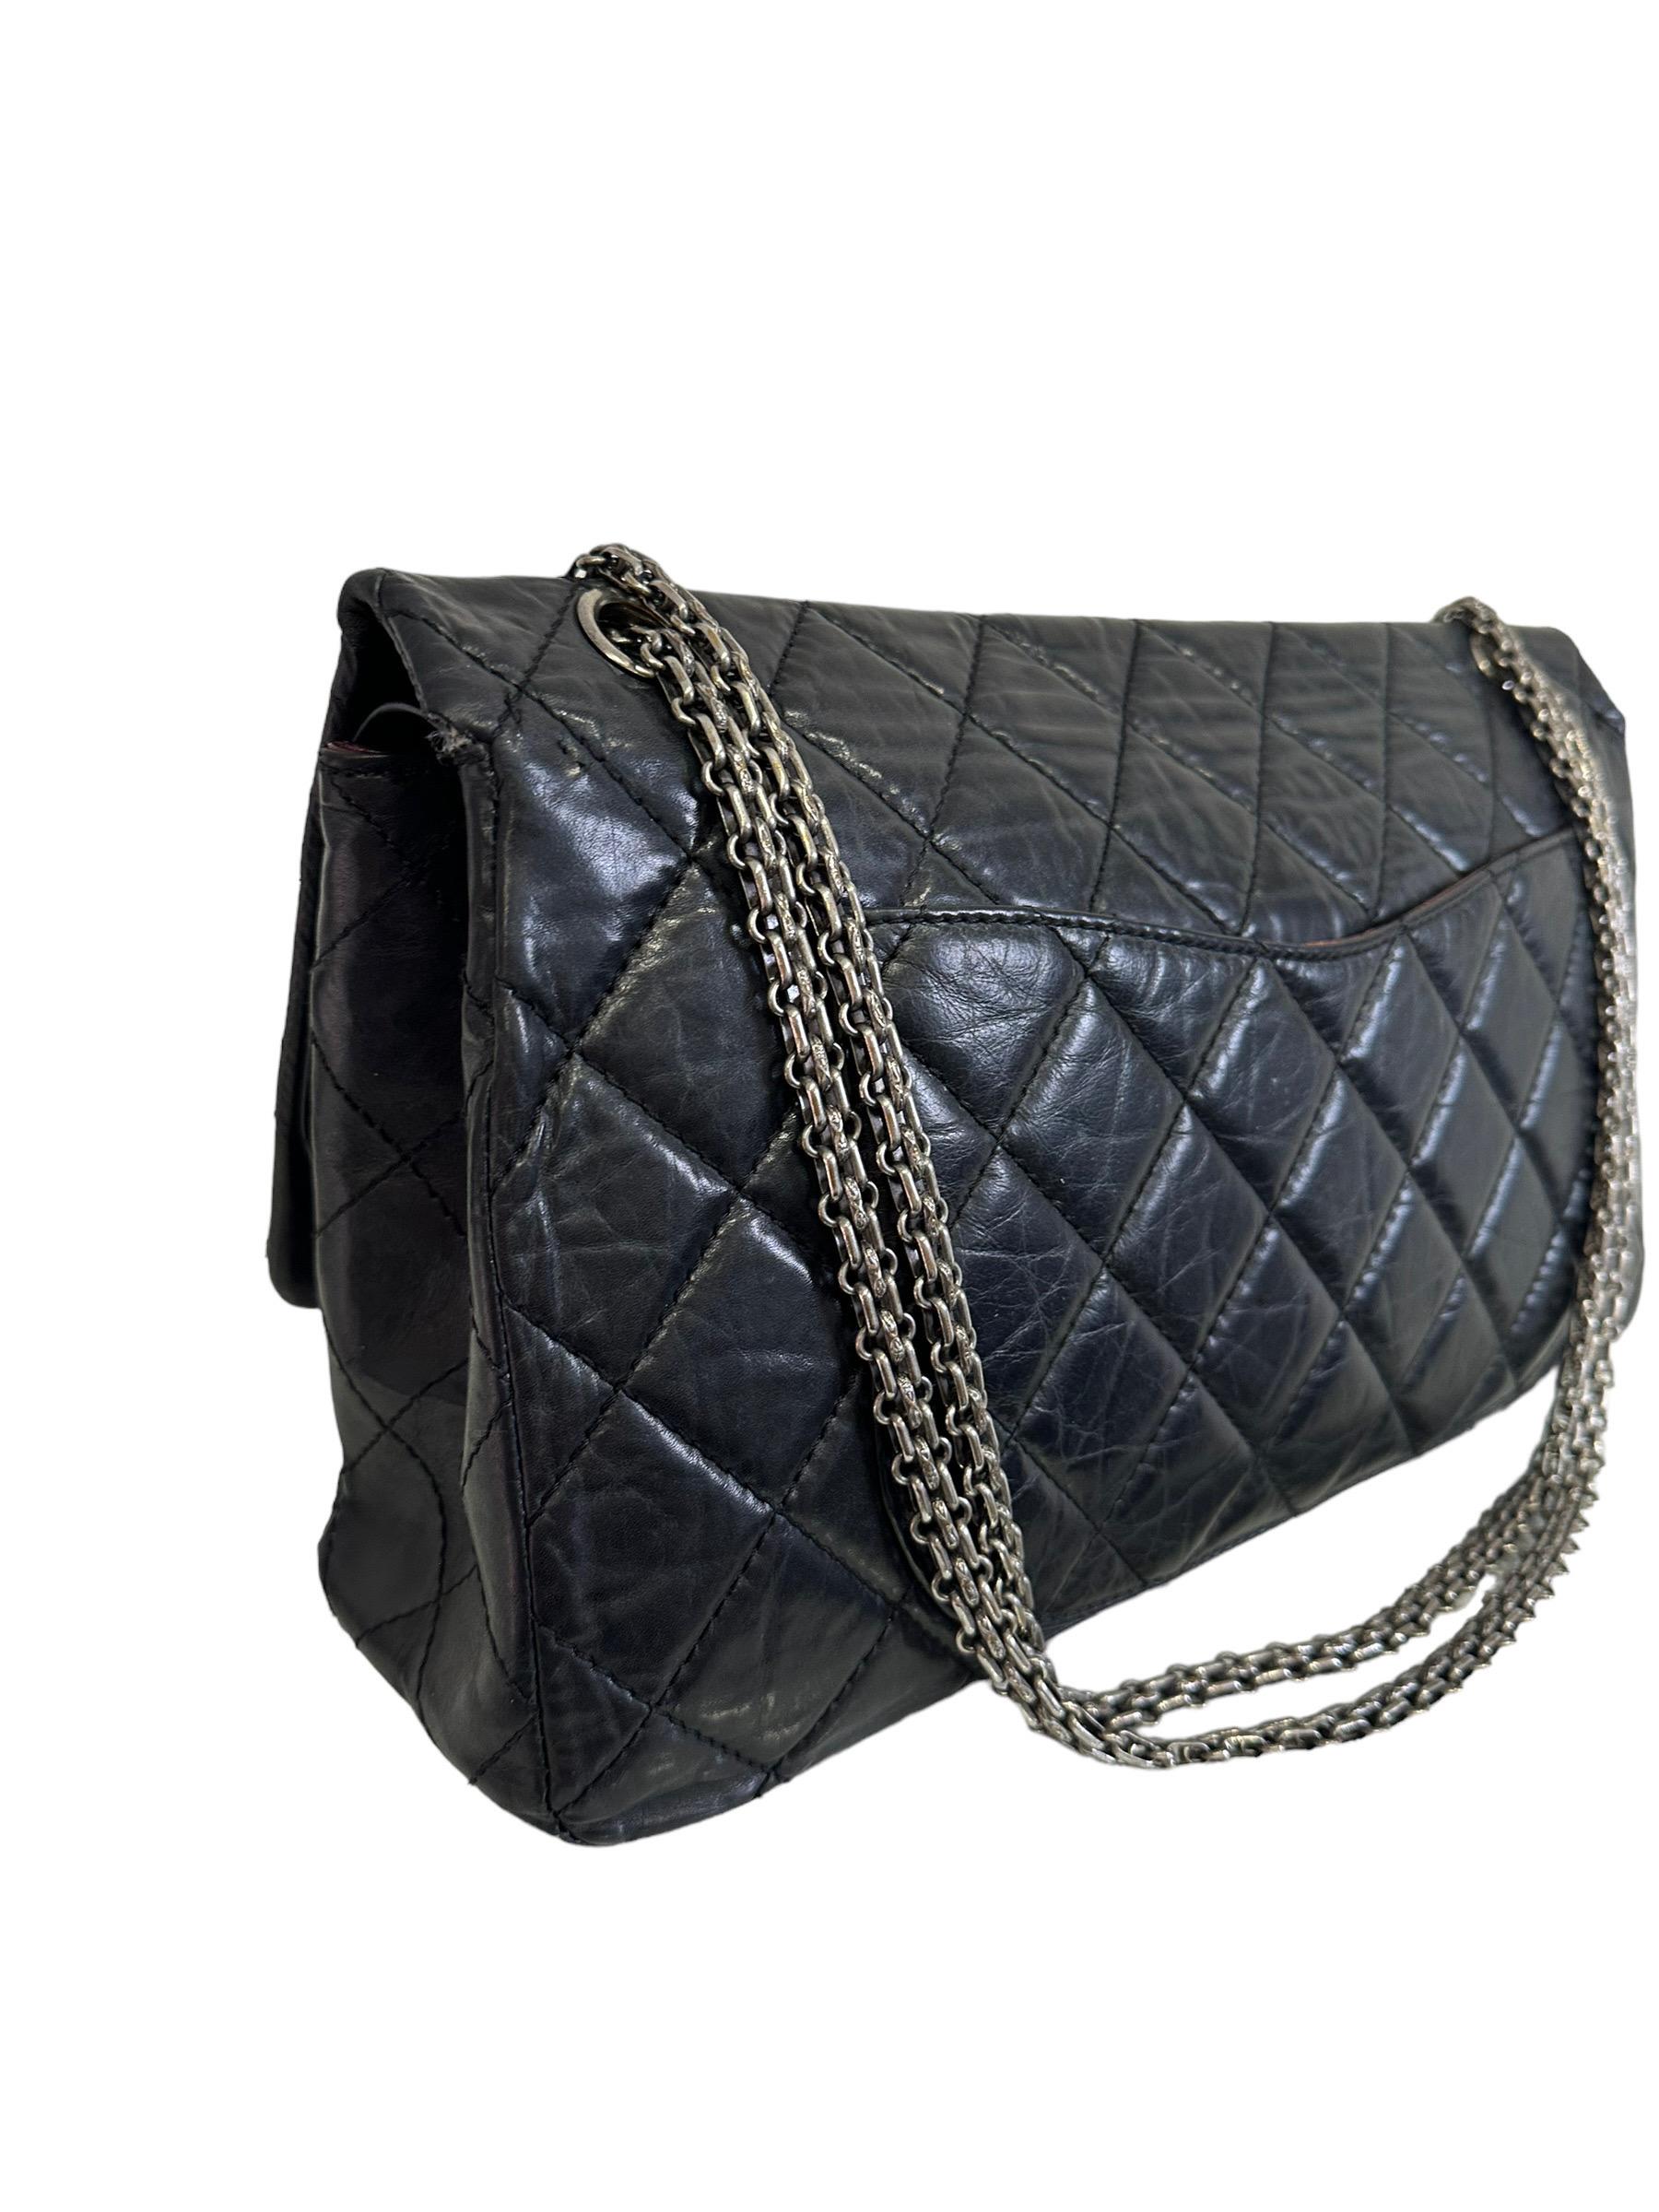 2008 Chanel Reissue Maxi Jumbo Blue Top Shoulder Bag For Sale 3